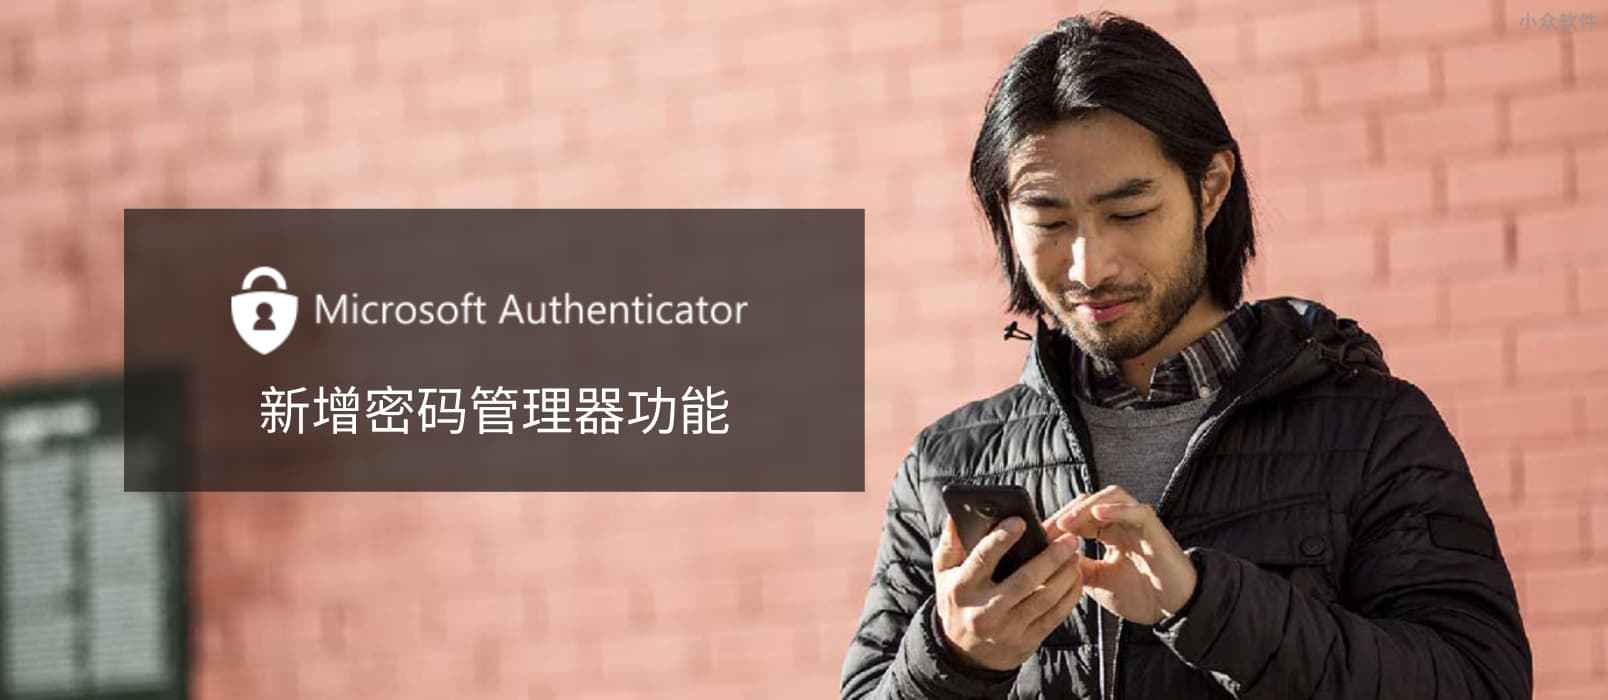 Microsoft Authenticator 密码管理器 – 从 Edge 同步密码，支持在 iPhone、Android 设备及 Chrome 